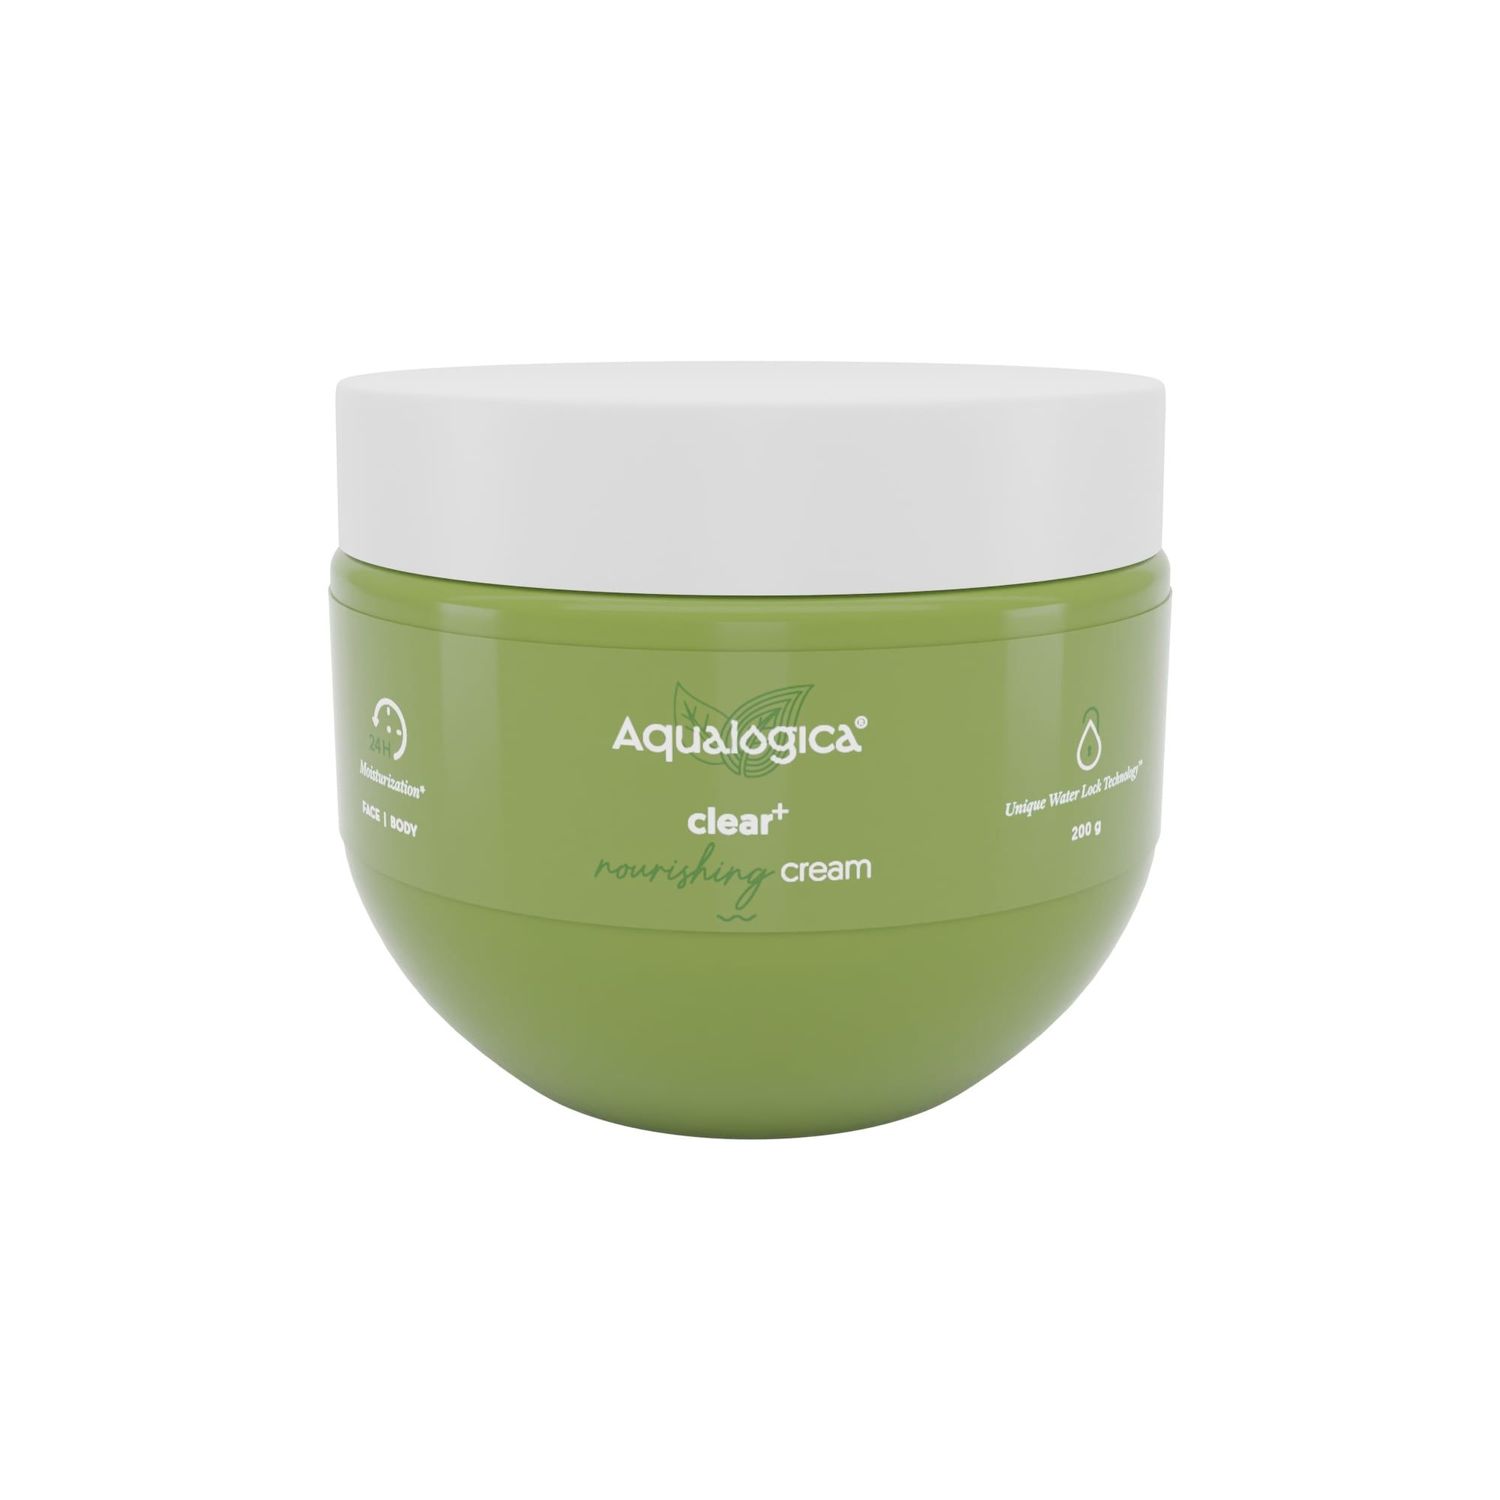 Buy Aqualogica Clear+ Nourishing Cream with Green Tea & Salicylic Acid 200g - Purplle